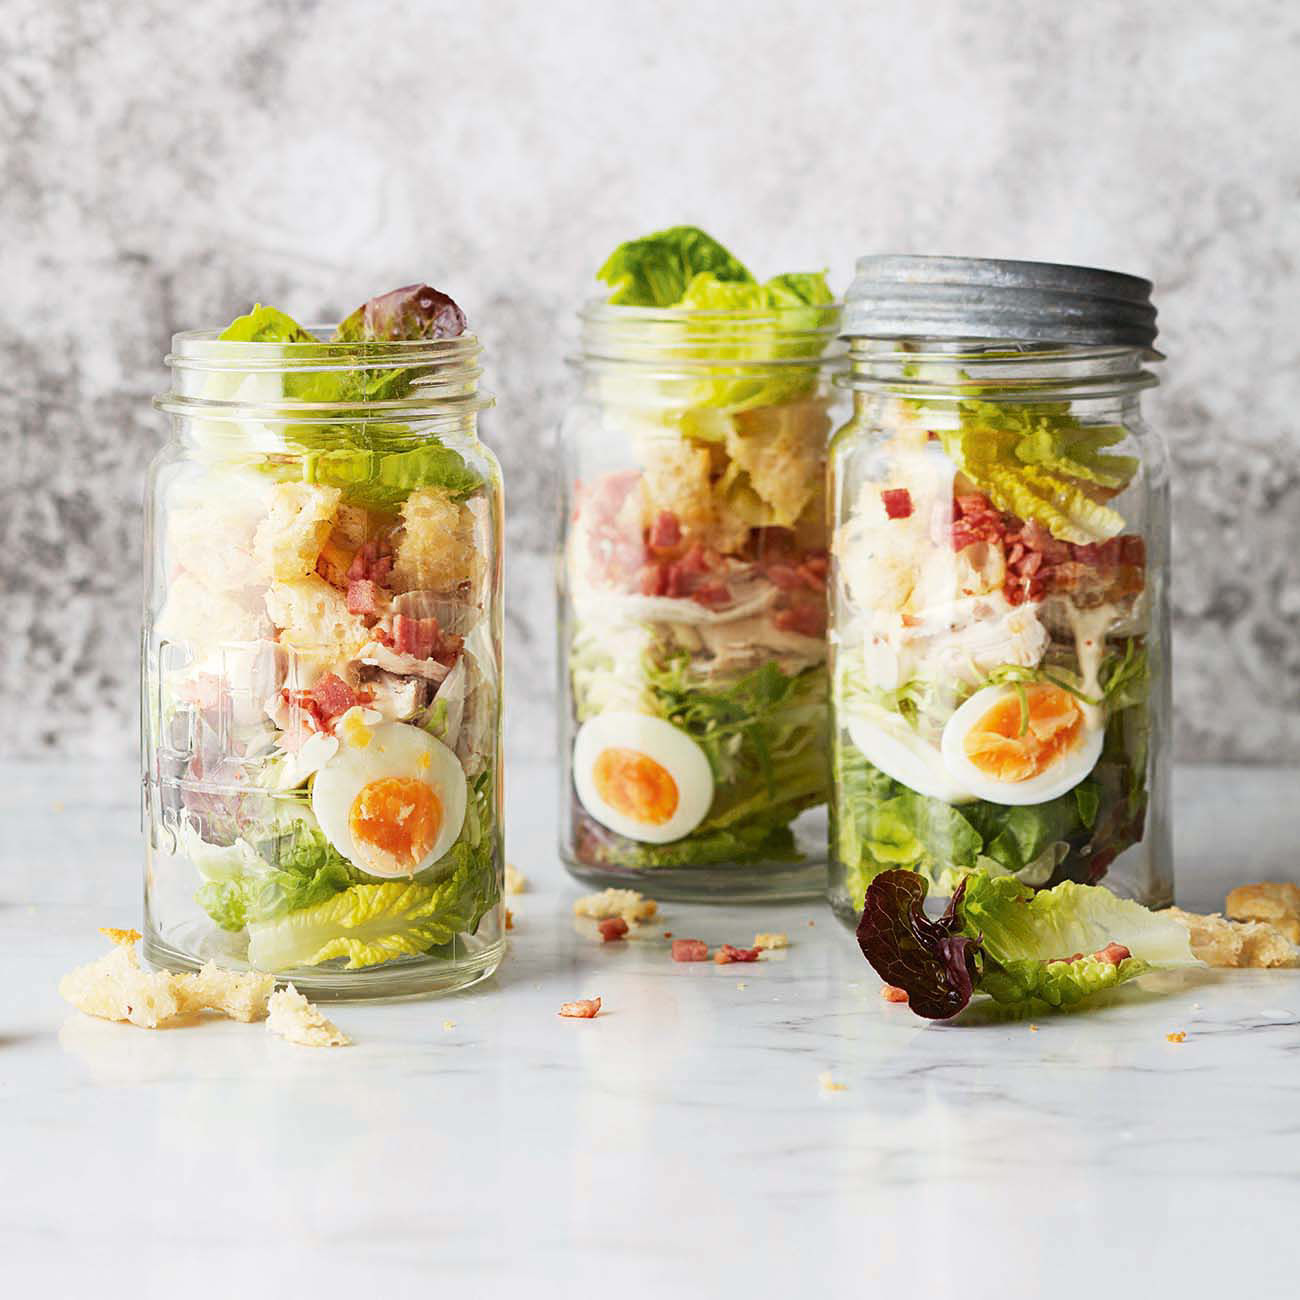 How to Make Salad in a Jar + No-Fail Recipes